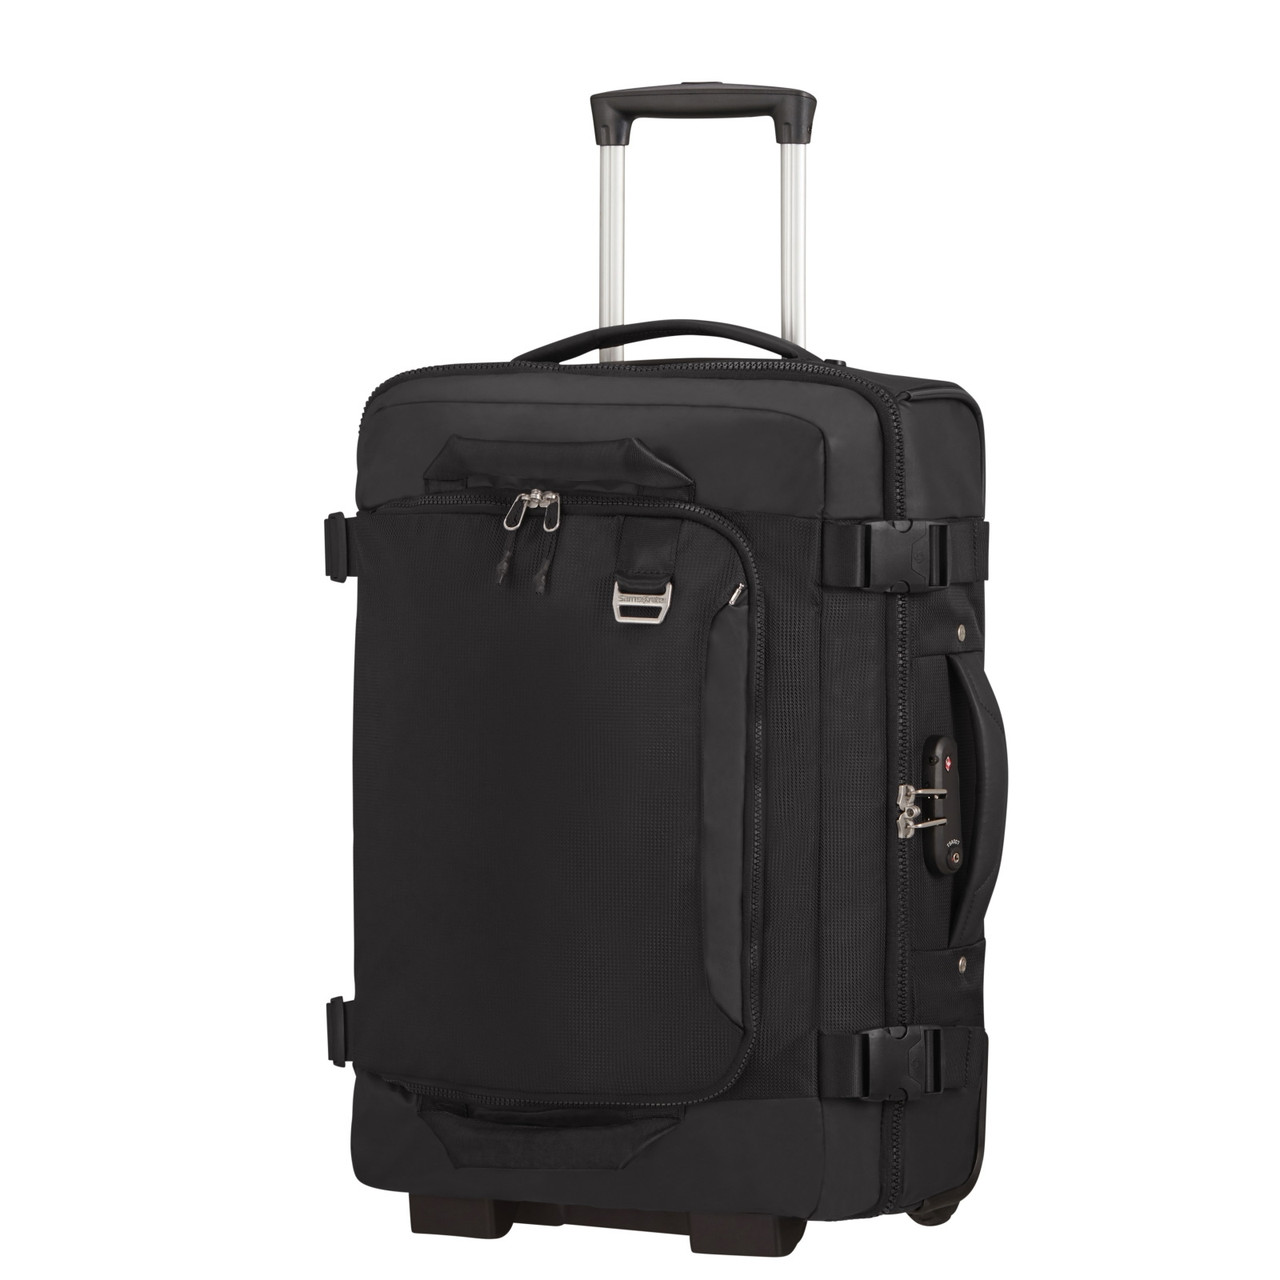 Samsonite Paradiver Light Medium Tablet Backpack at Luggage Superstore